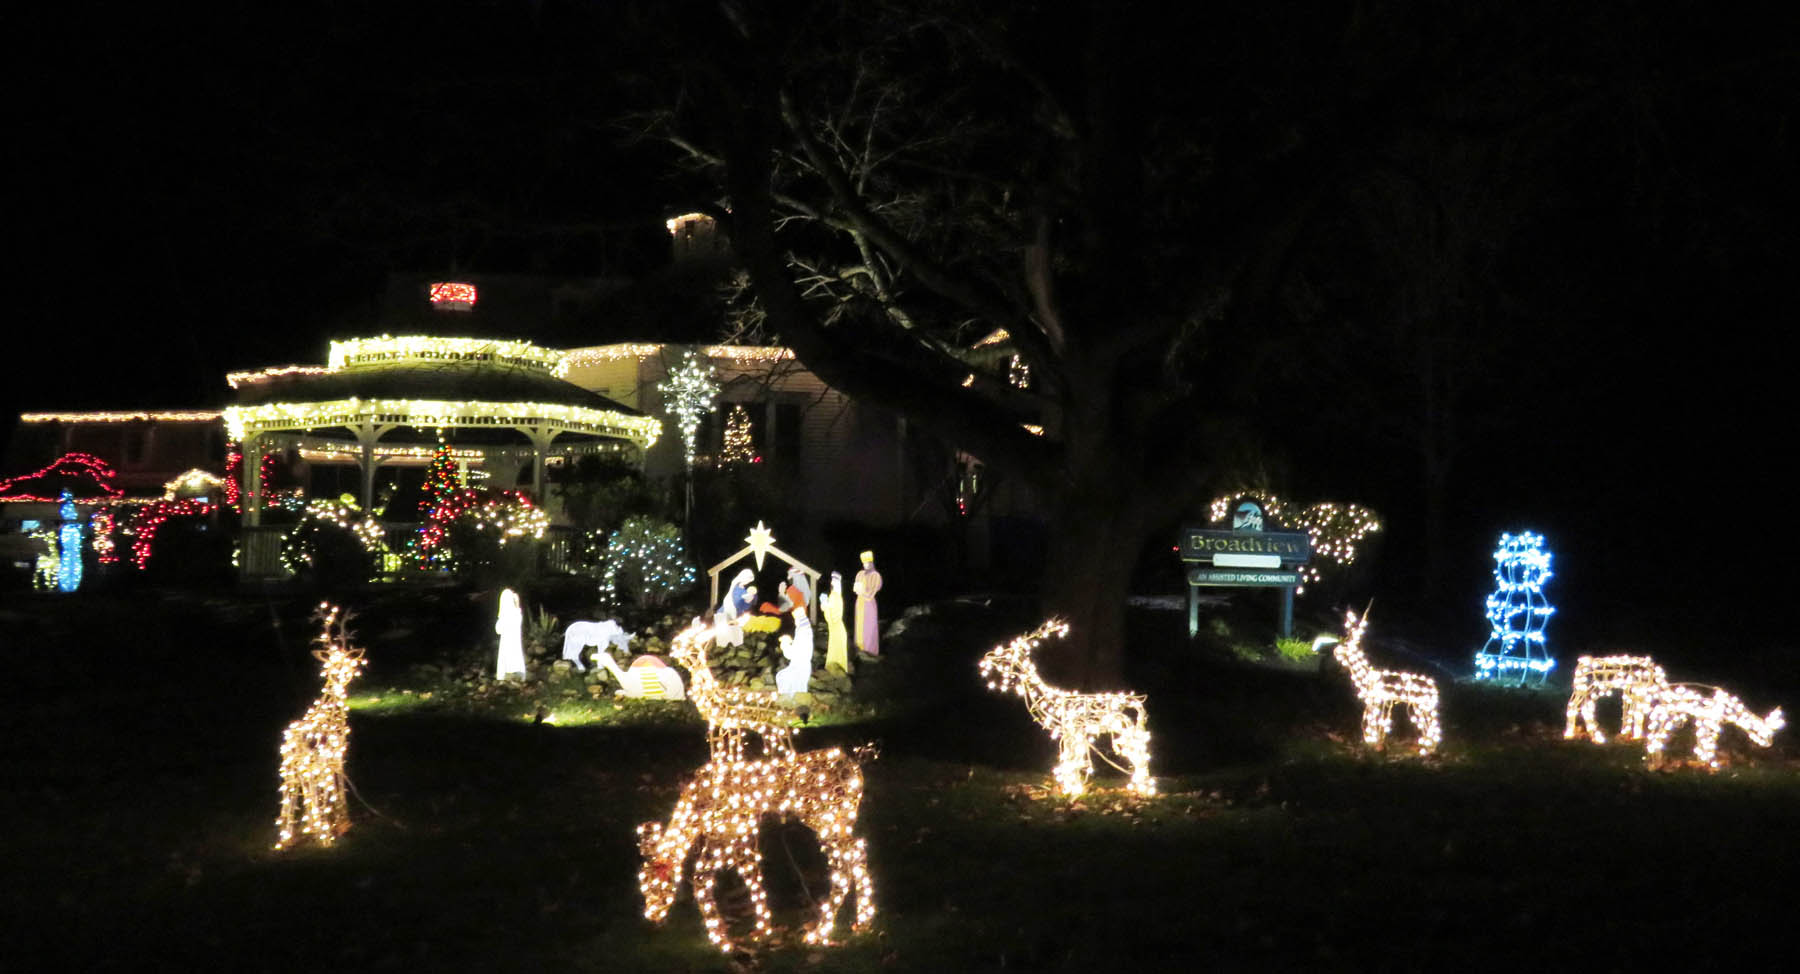 Broadview Manor holiday lights